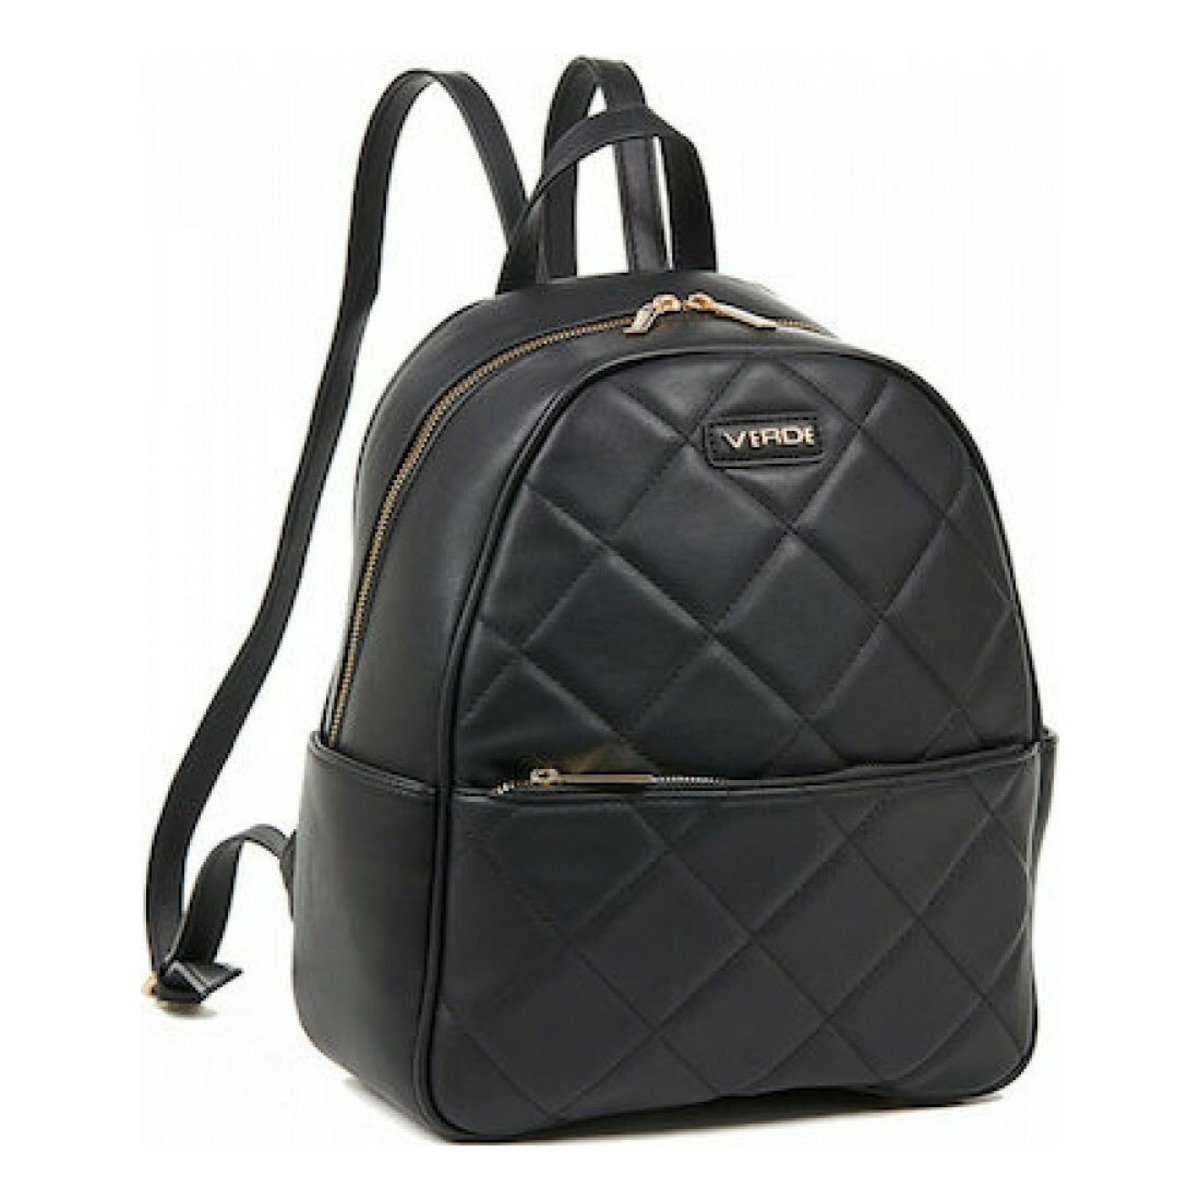 Backpack Verde 16-6240 black